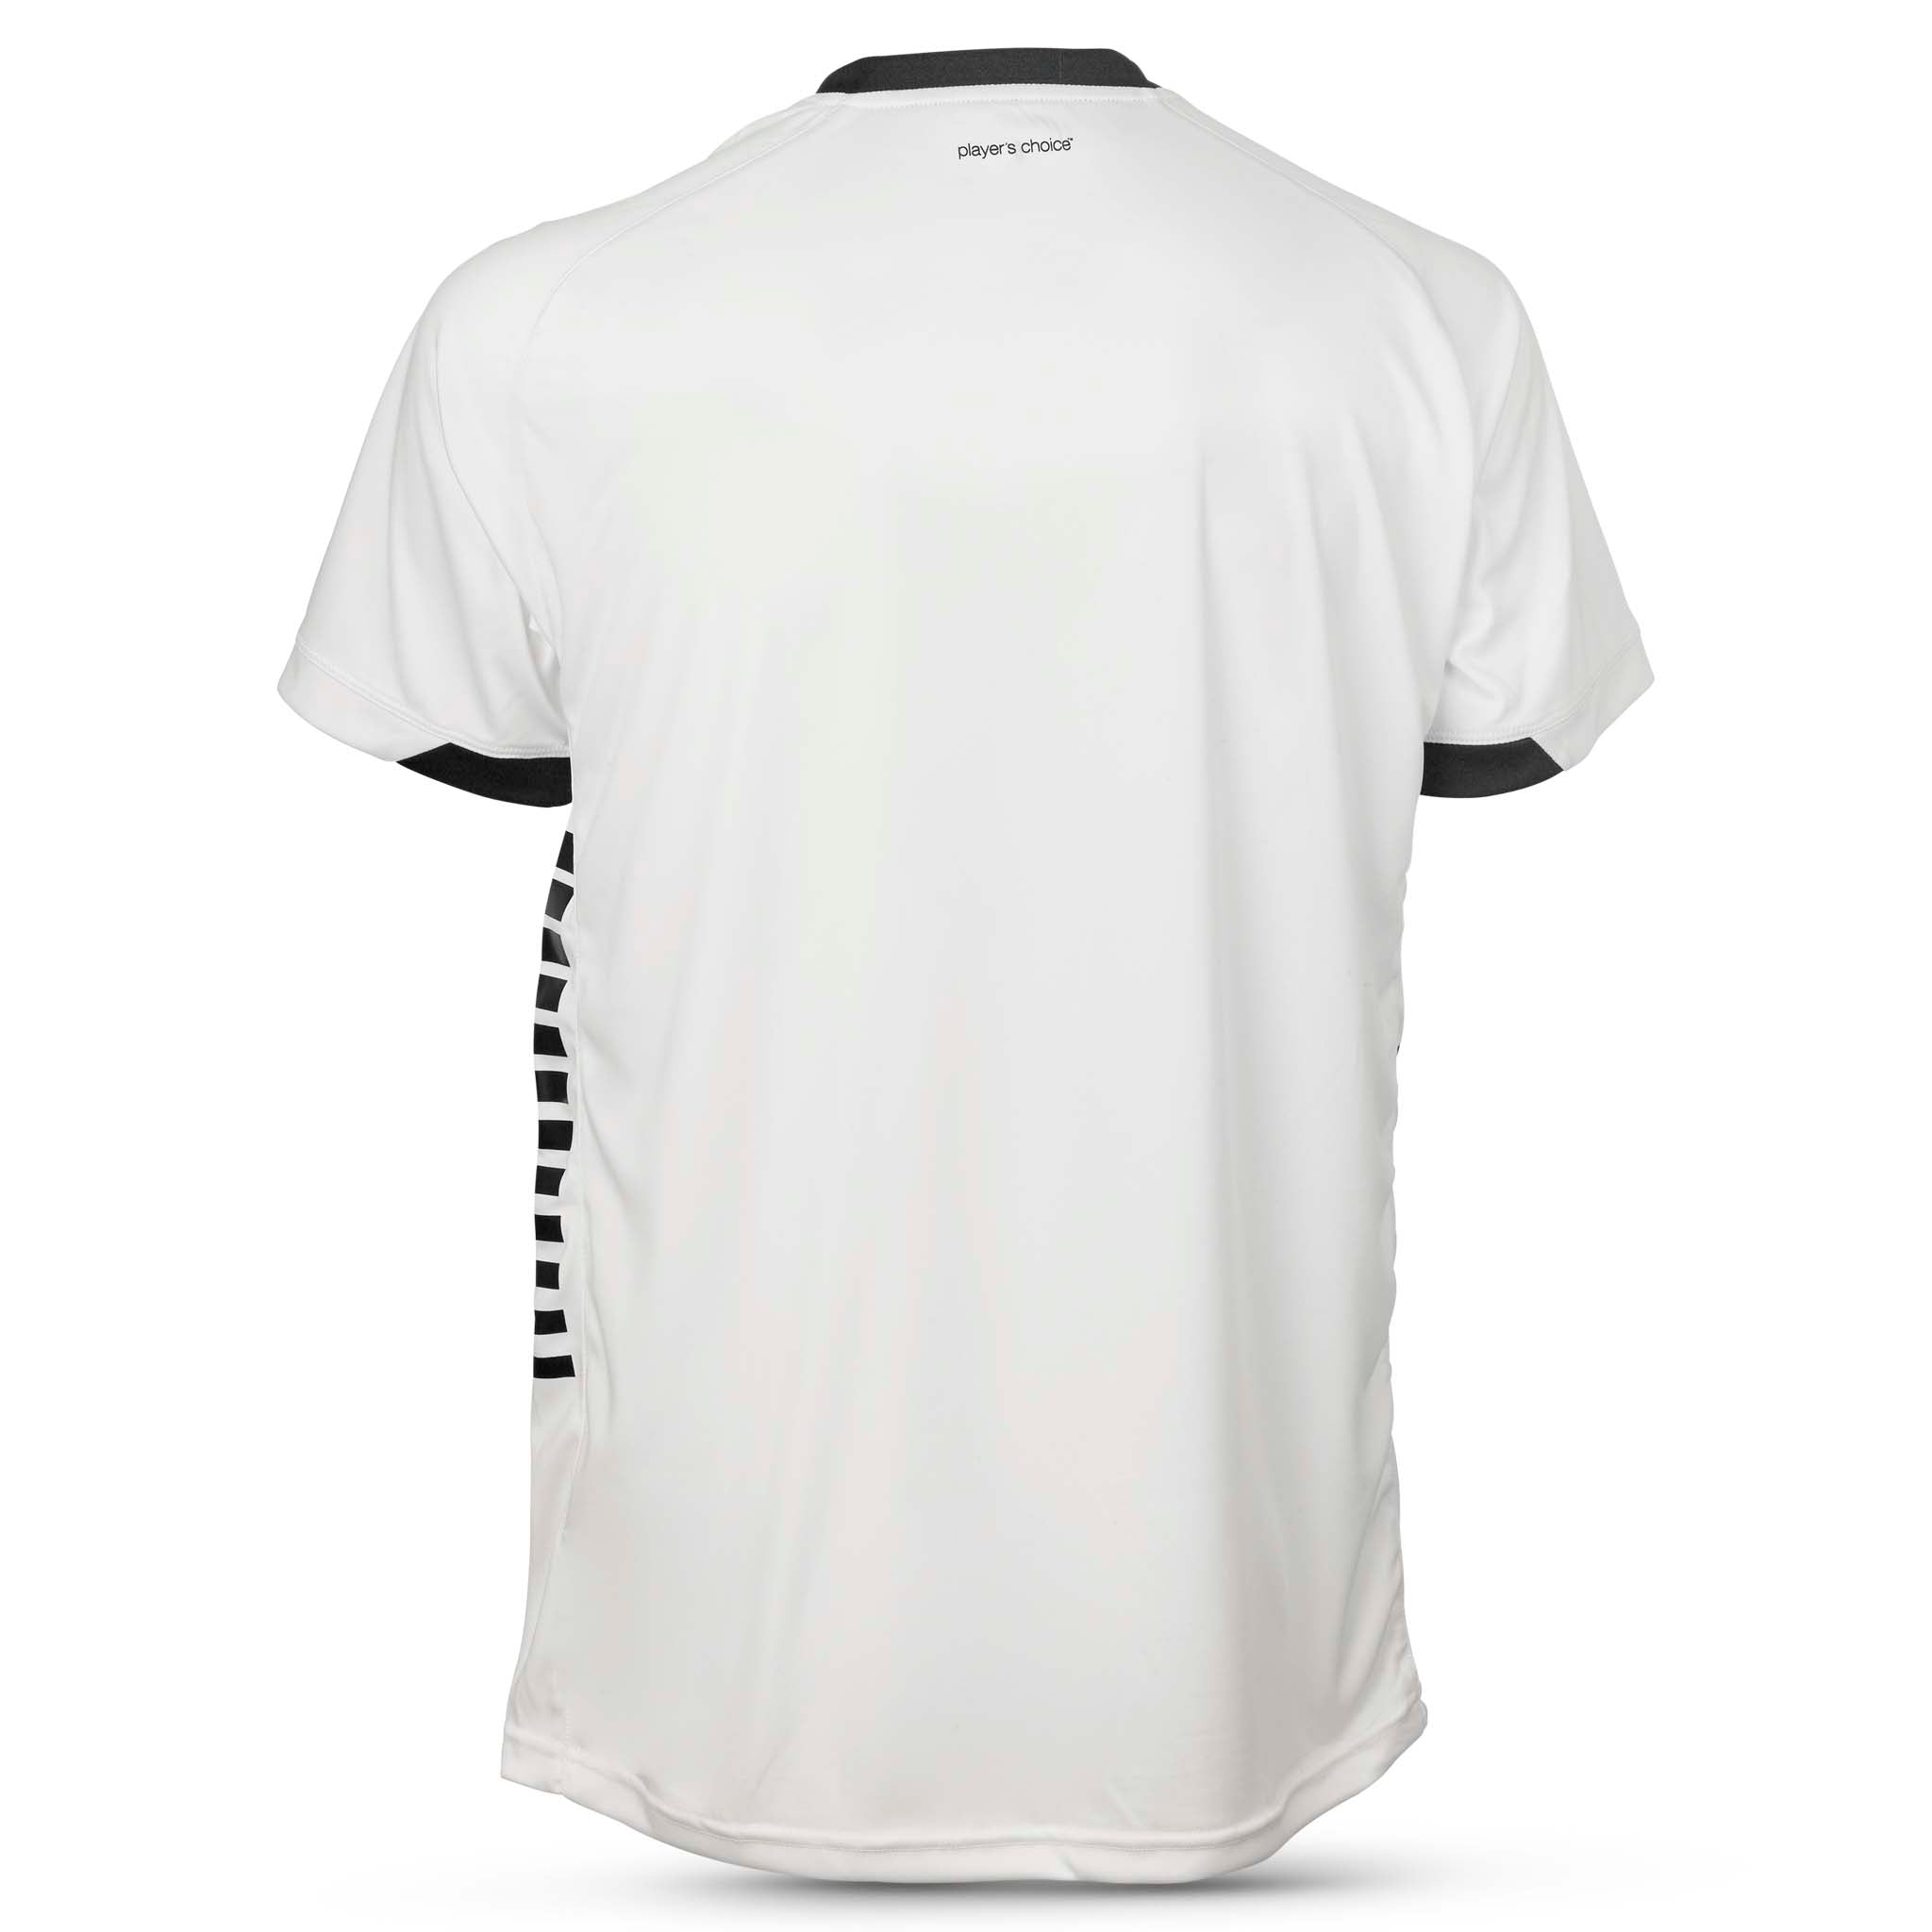 Spain Short Sleeve player shirt #colour_white/black